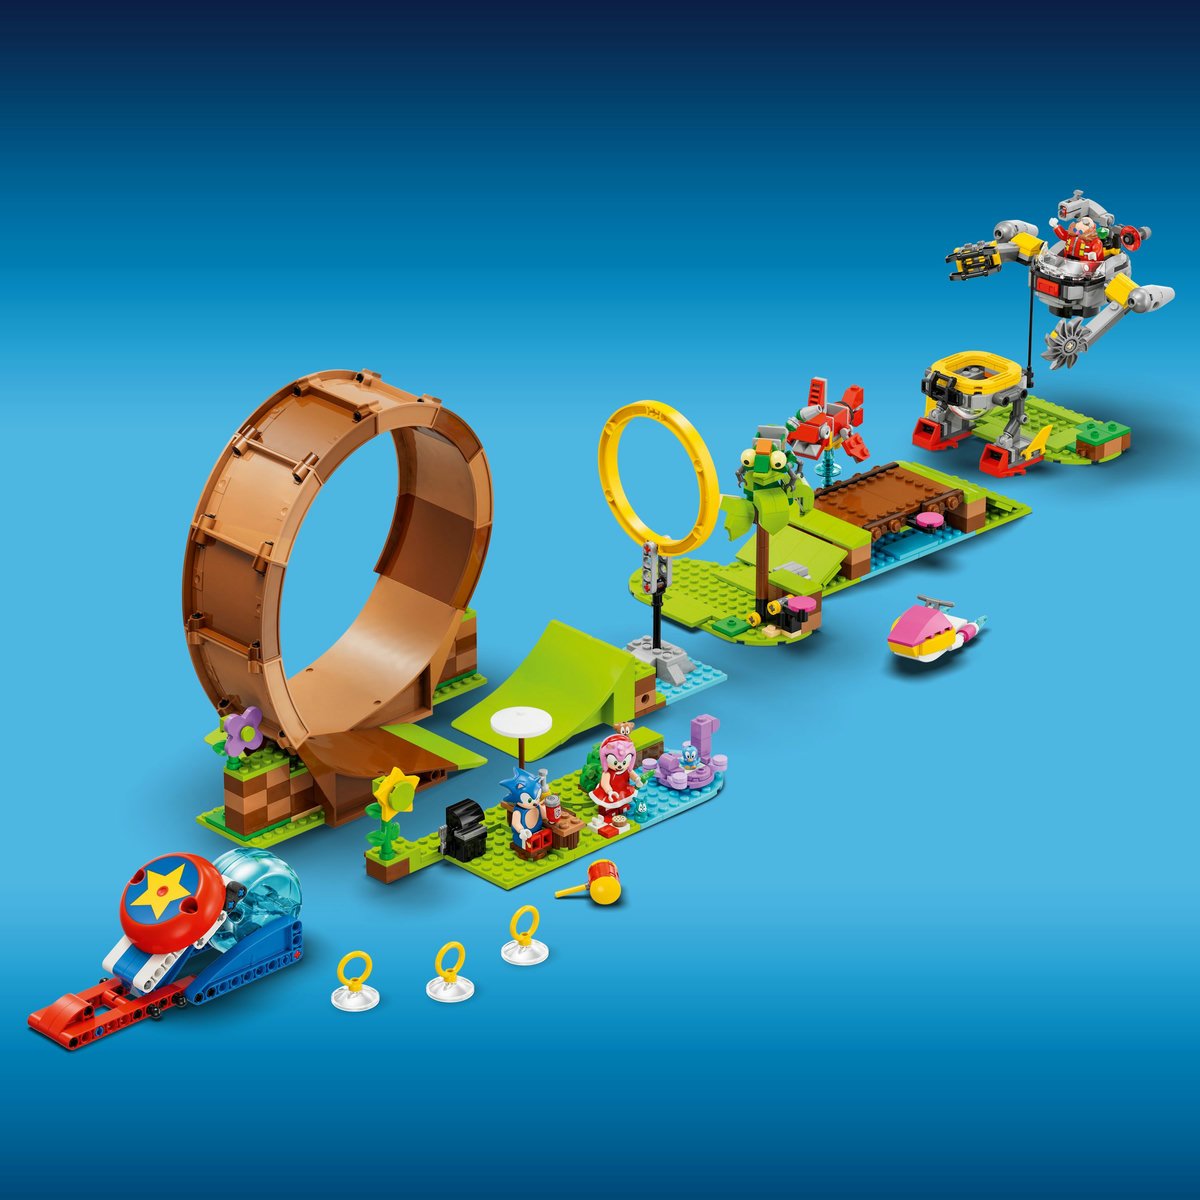 LEGO Sonic The Hedgehog - Desafio de Looping da Zona de Green Hill